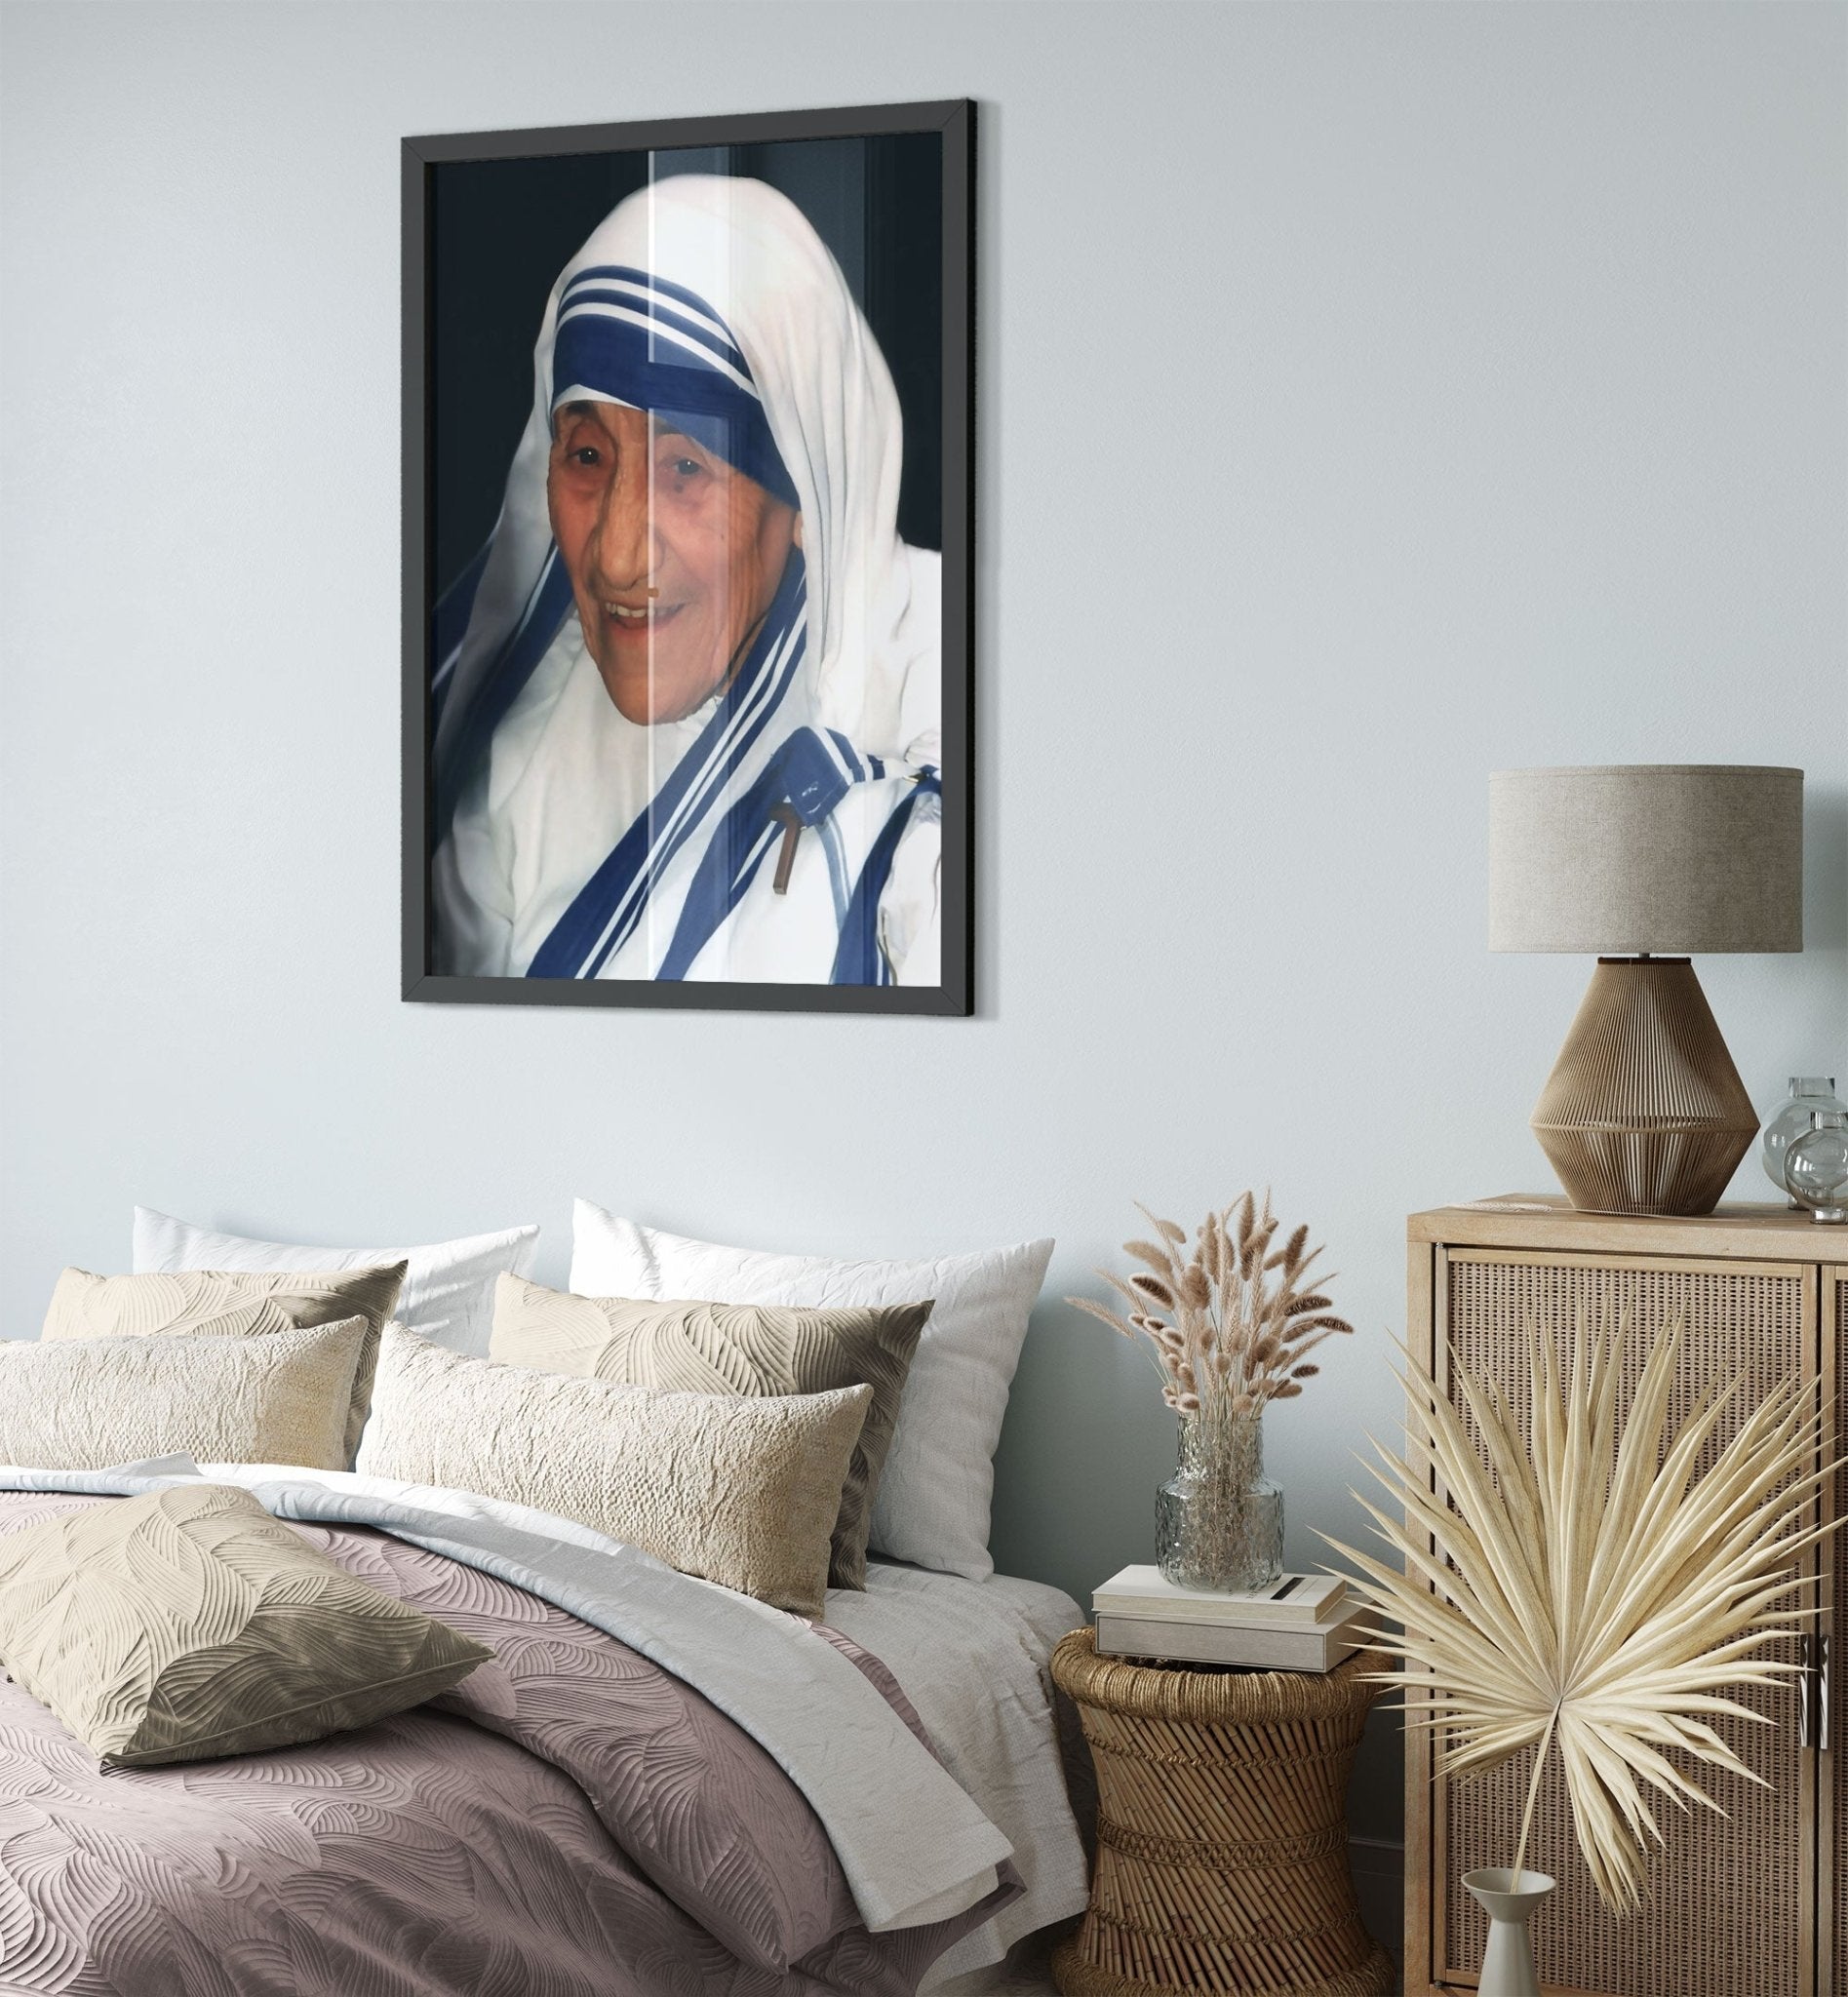 Mother Teresa Framed, Missionary, Saint, Vintage Photo - Iconic Mother Teresa Framed Print - Missionaries Of Charity UK, EU USA Domestic Shipping - WallArtPrints4U